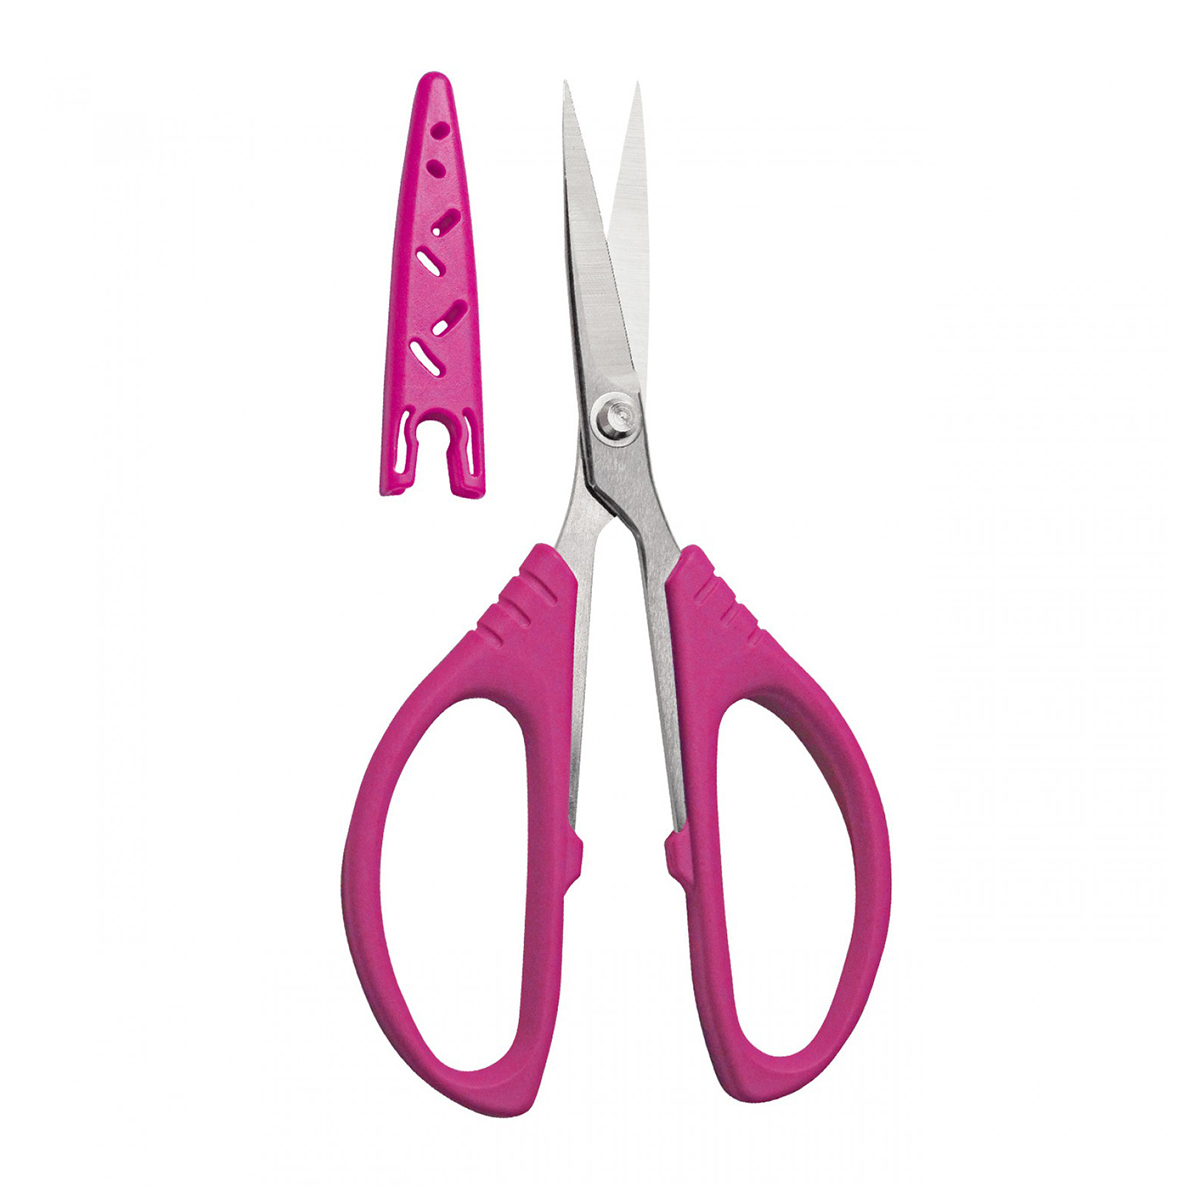 Buy HAPY SHOP Loop Scissors Grip Scissor 3 Pack for Teens and